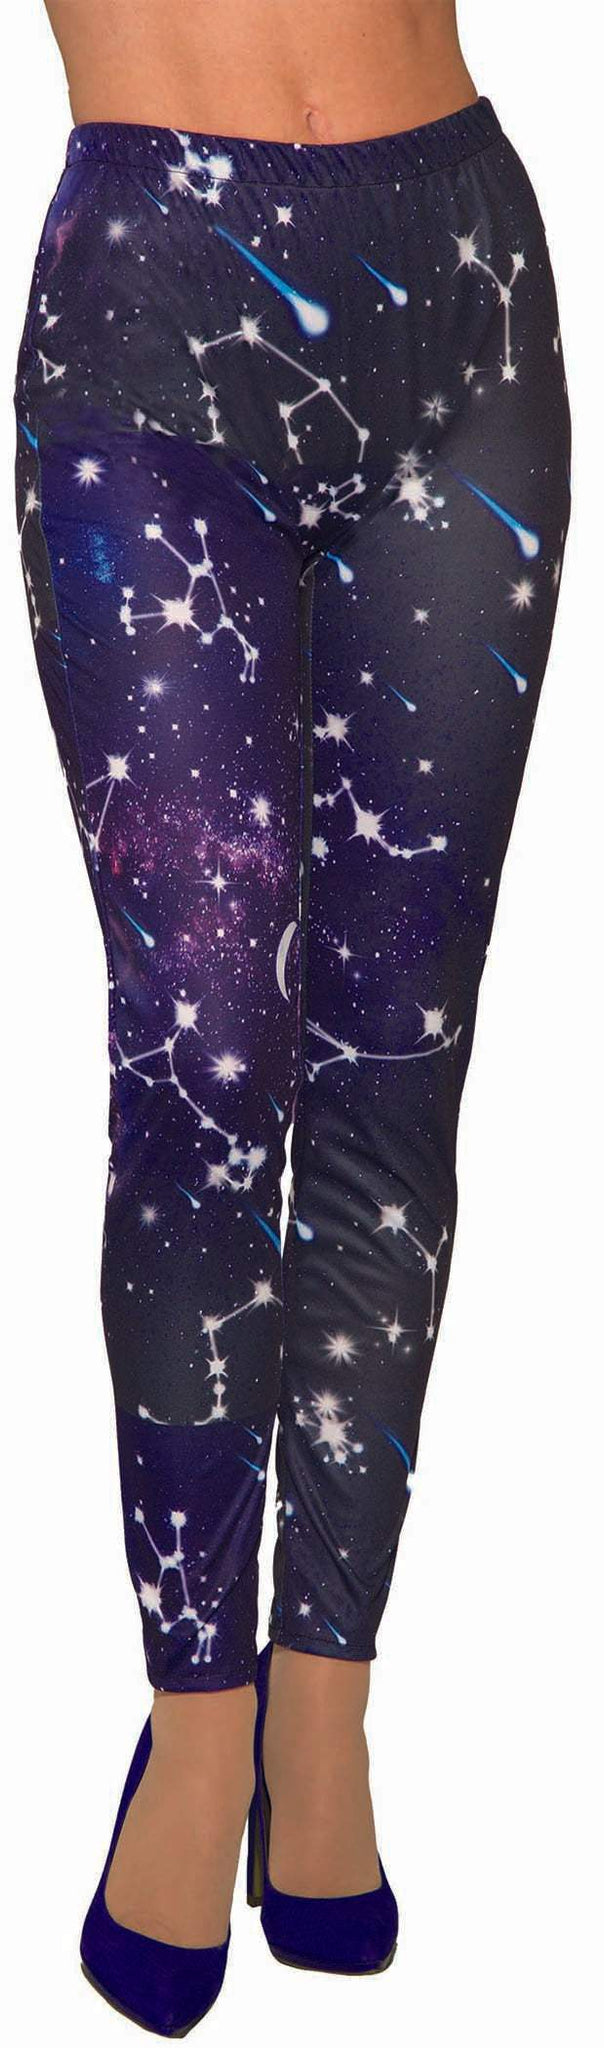 Celestial Galaxy Leggings Adult - Standard